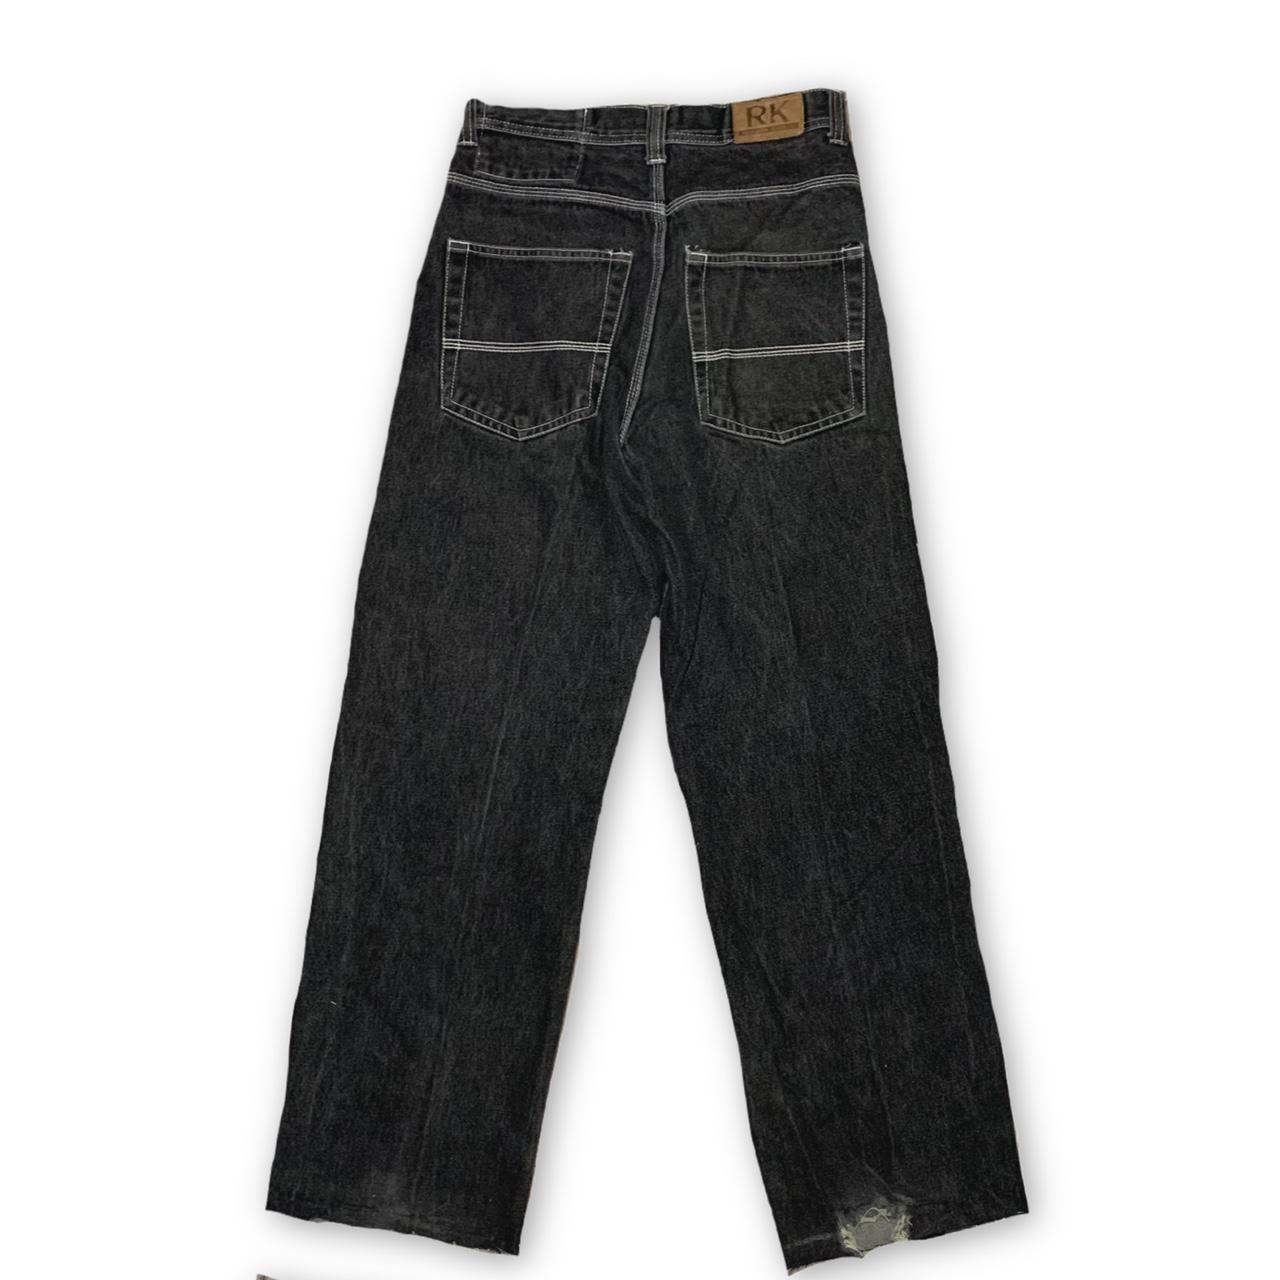 Product Image 2 - Vintage Rich Kids Jeans

- Good